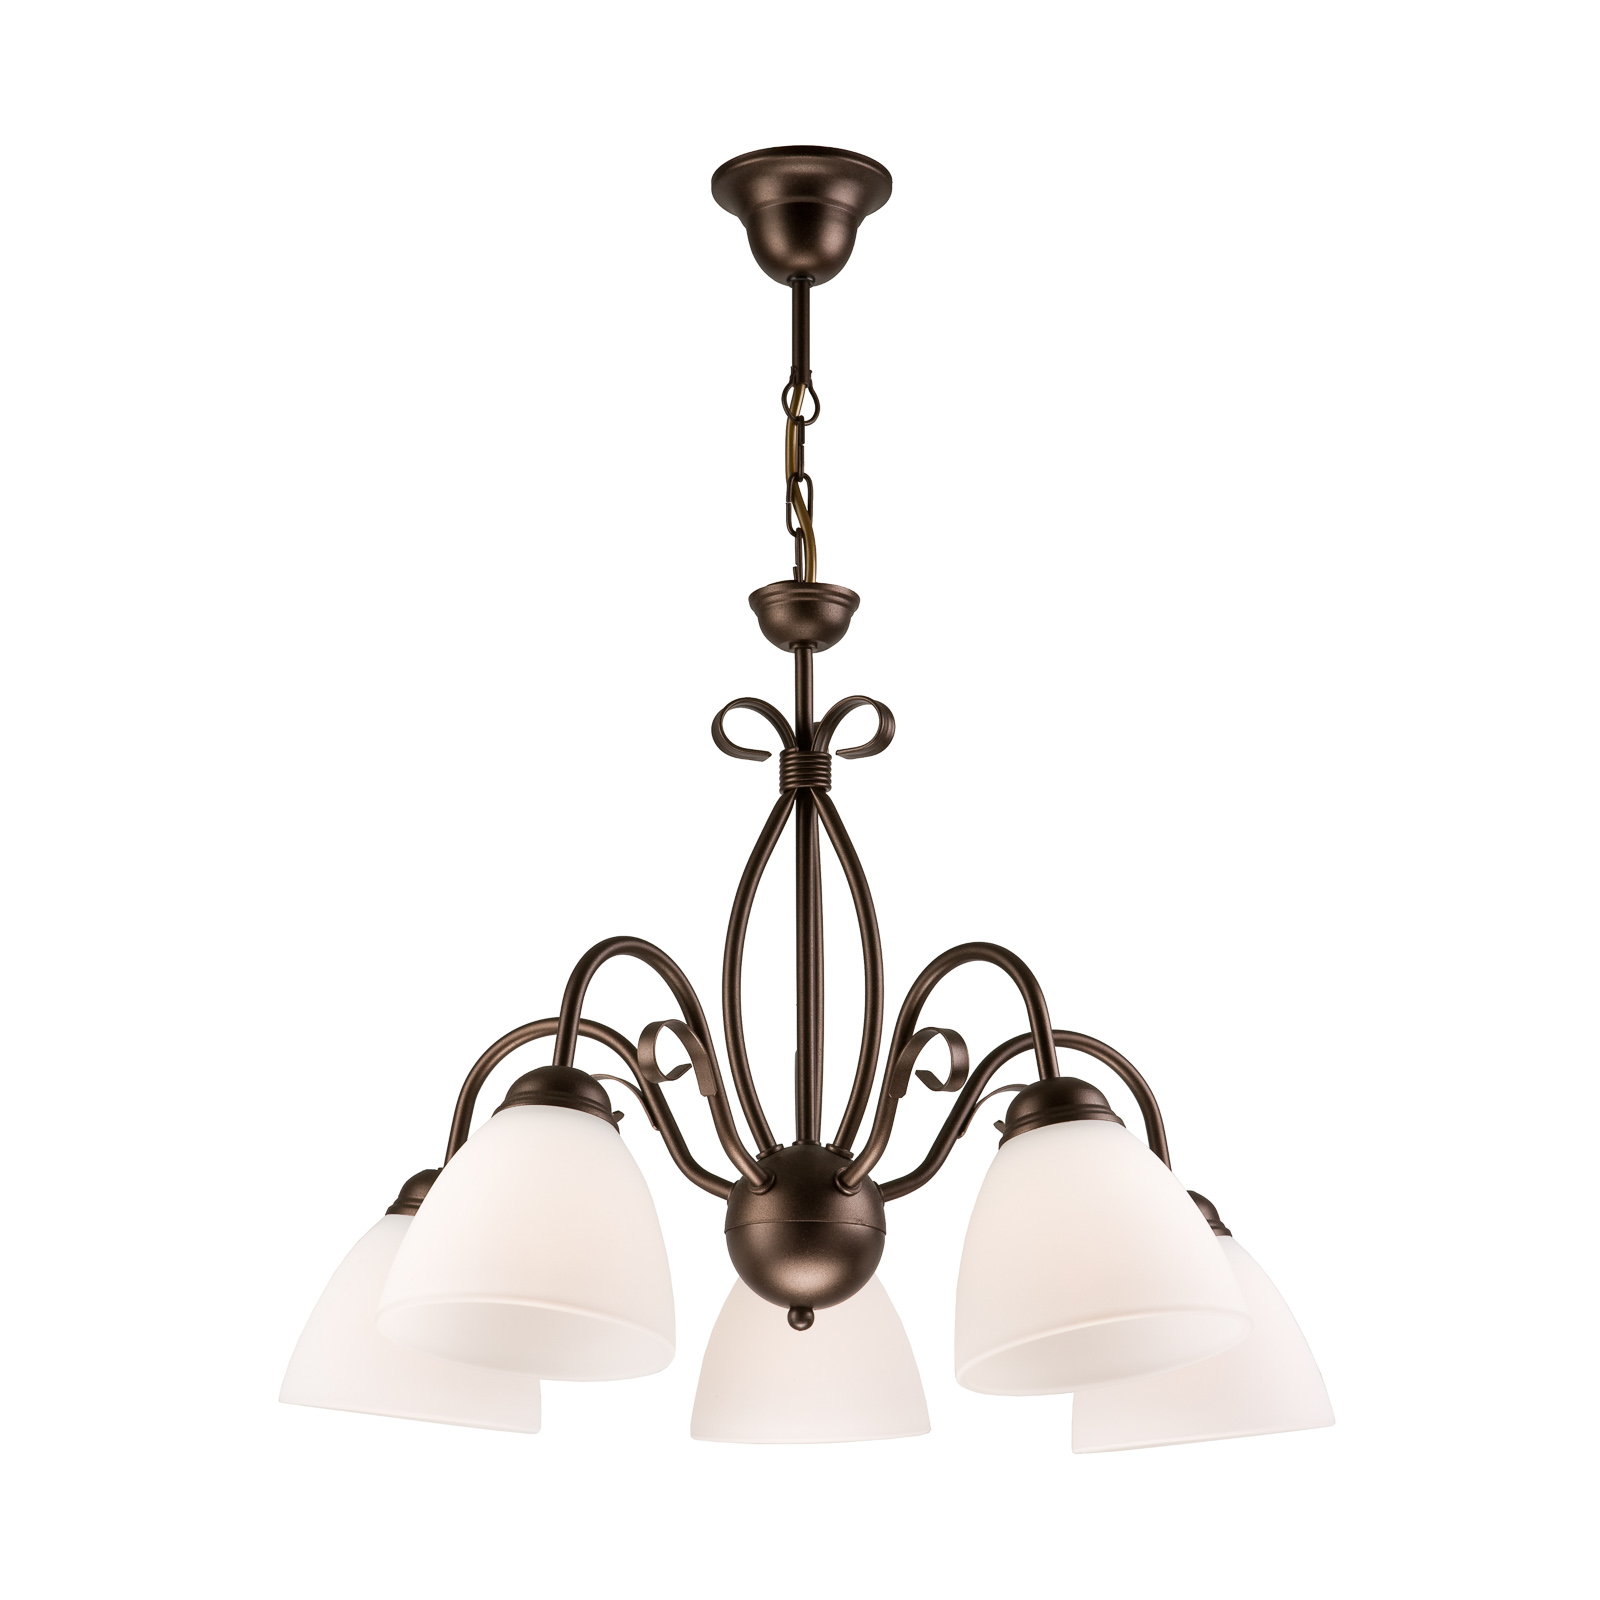 Hanglamp Adoro, 5-lamps, bruin